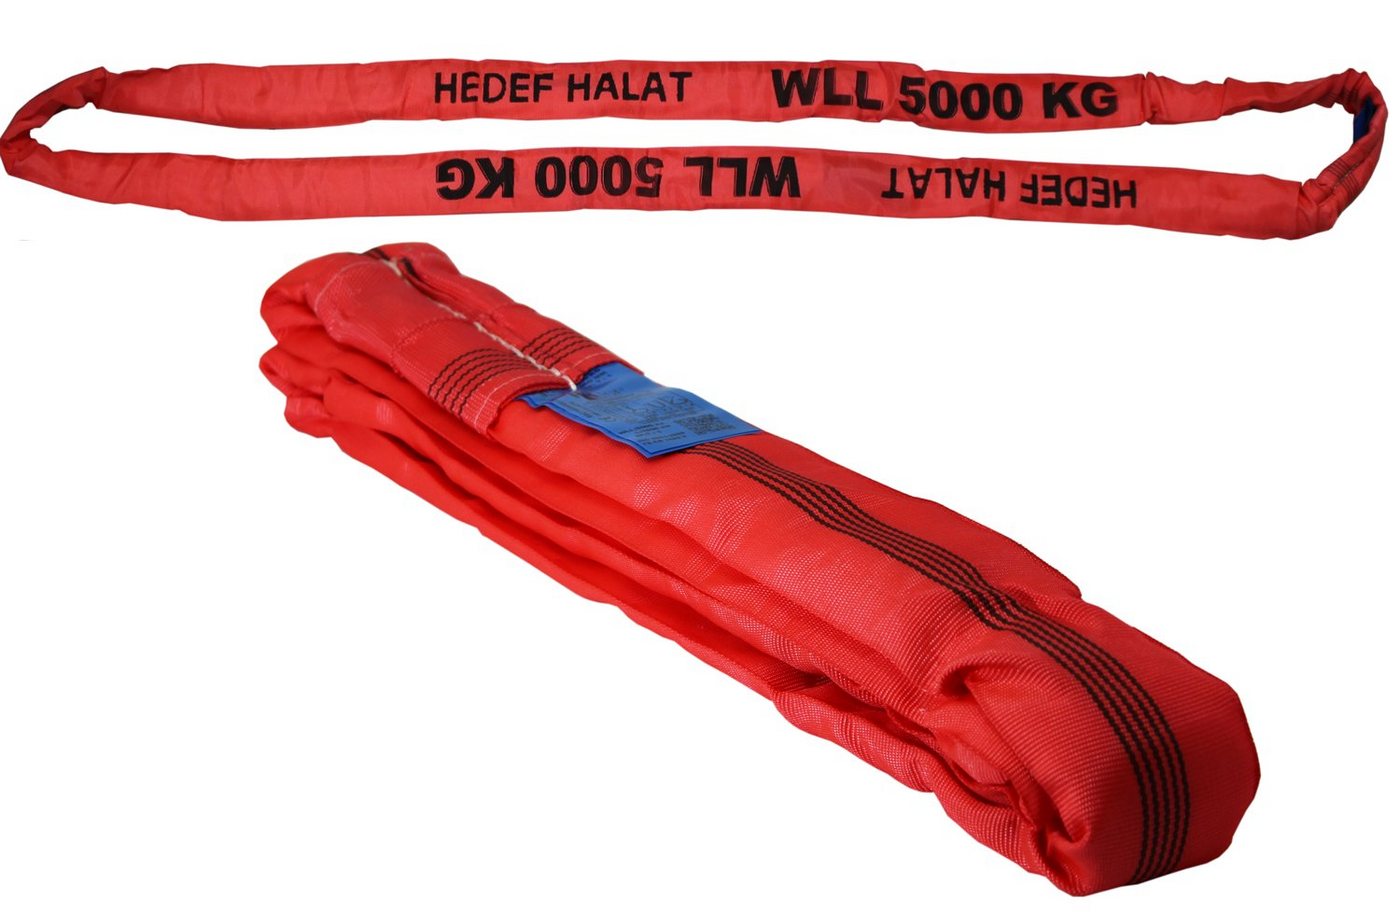 HEDEF HALAT Rundschlinge mit Einfachmantel 5 Tonnen 2.5 Meter SF: 7/1 DIN EN 1492- Hebeband, Rundschlingen Bandschlinge Hebegurt 2.5 m (umfang 5 m) von HEDEF HALAT